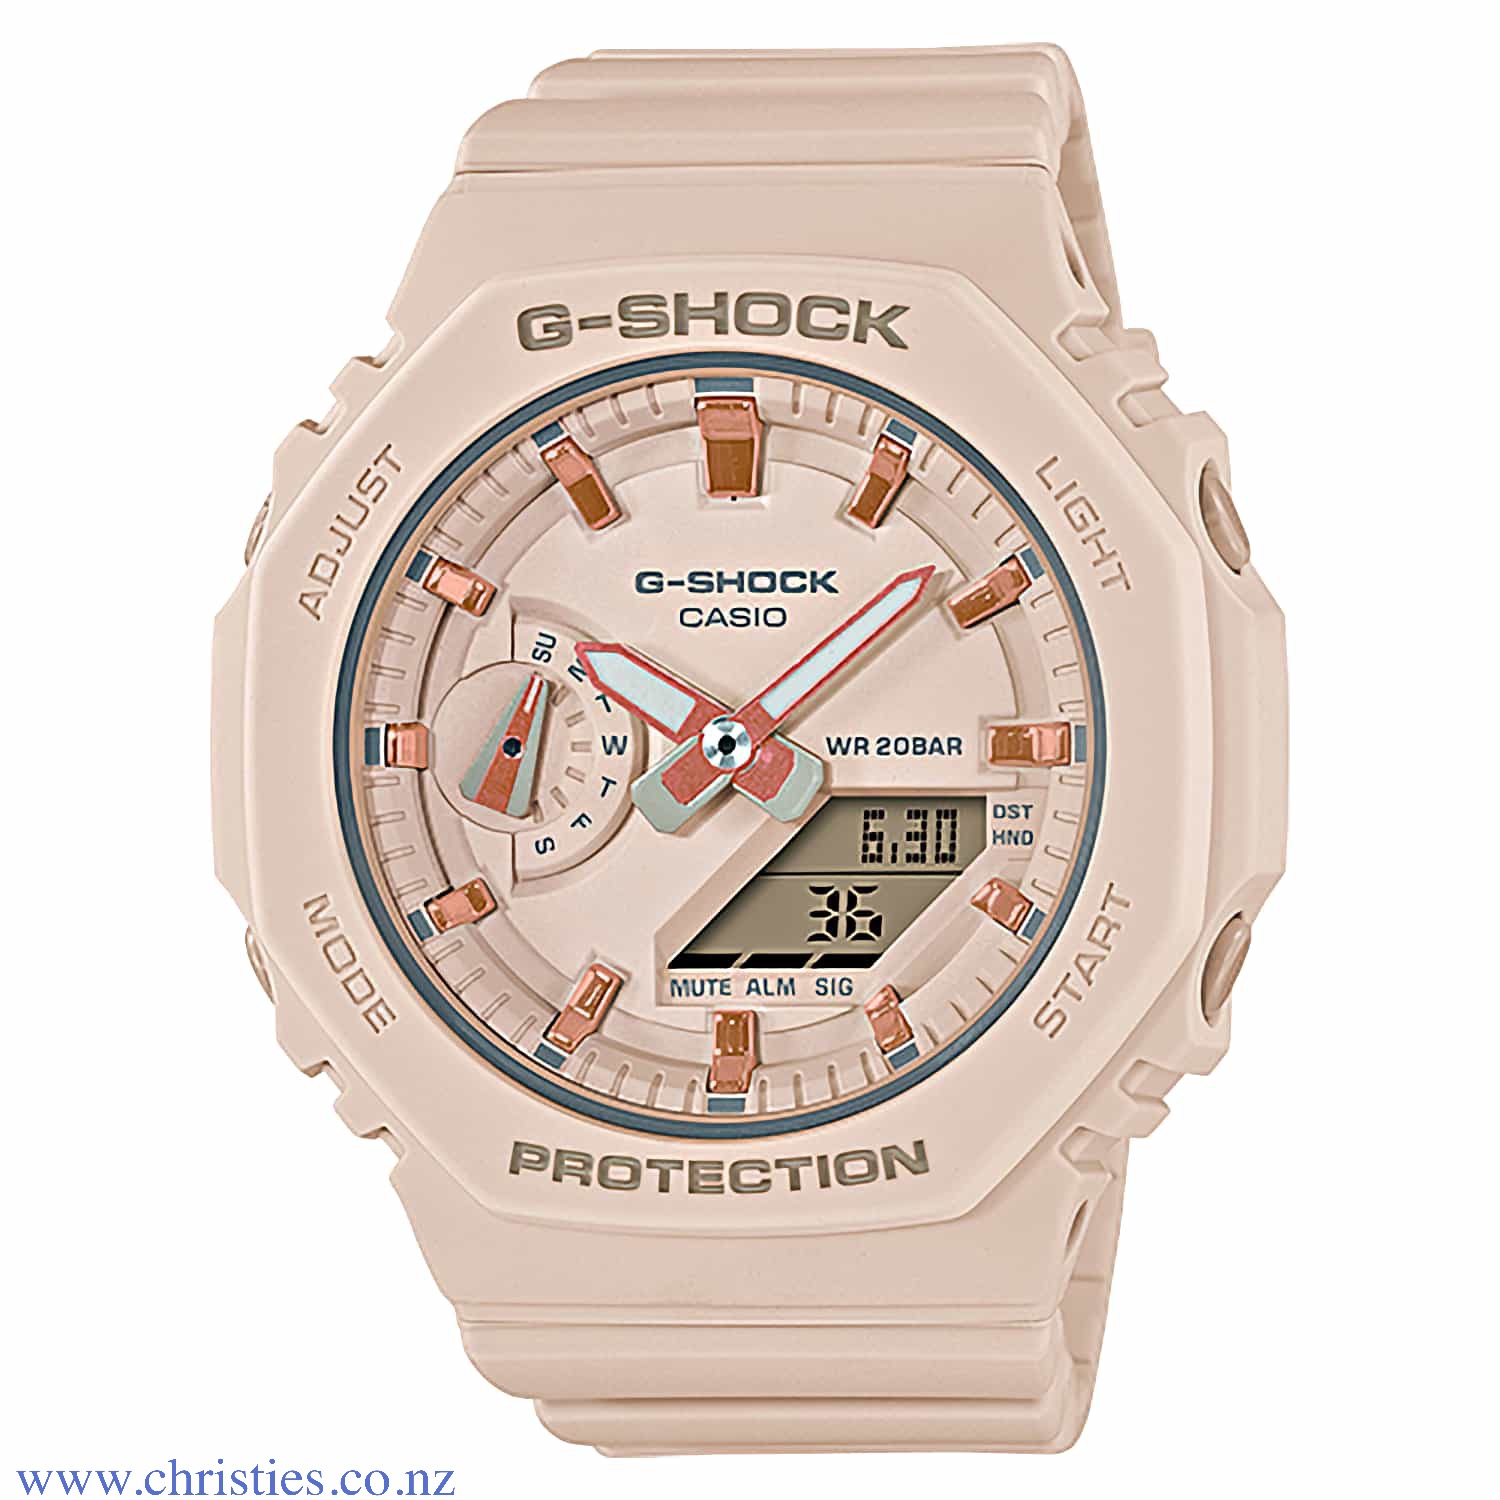 GMAS2100-4A G-SHOCK Carbon Core Womens Watch.casio watches nz sale $219.00